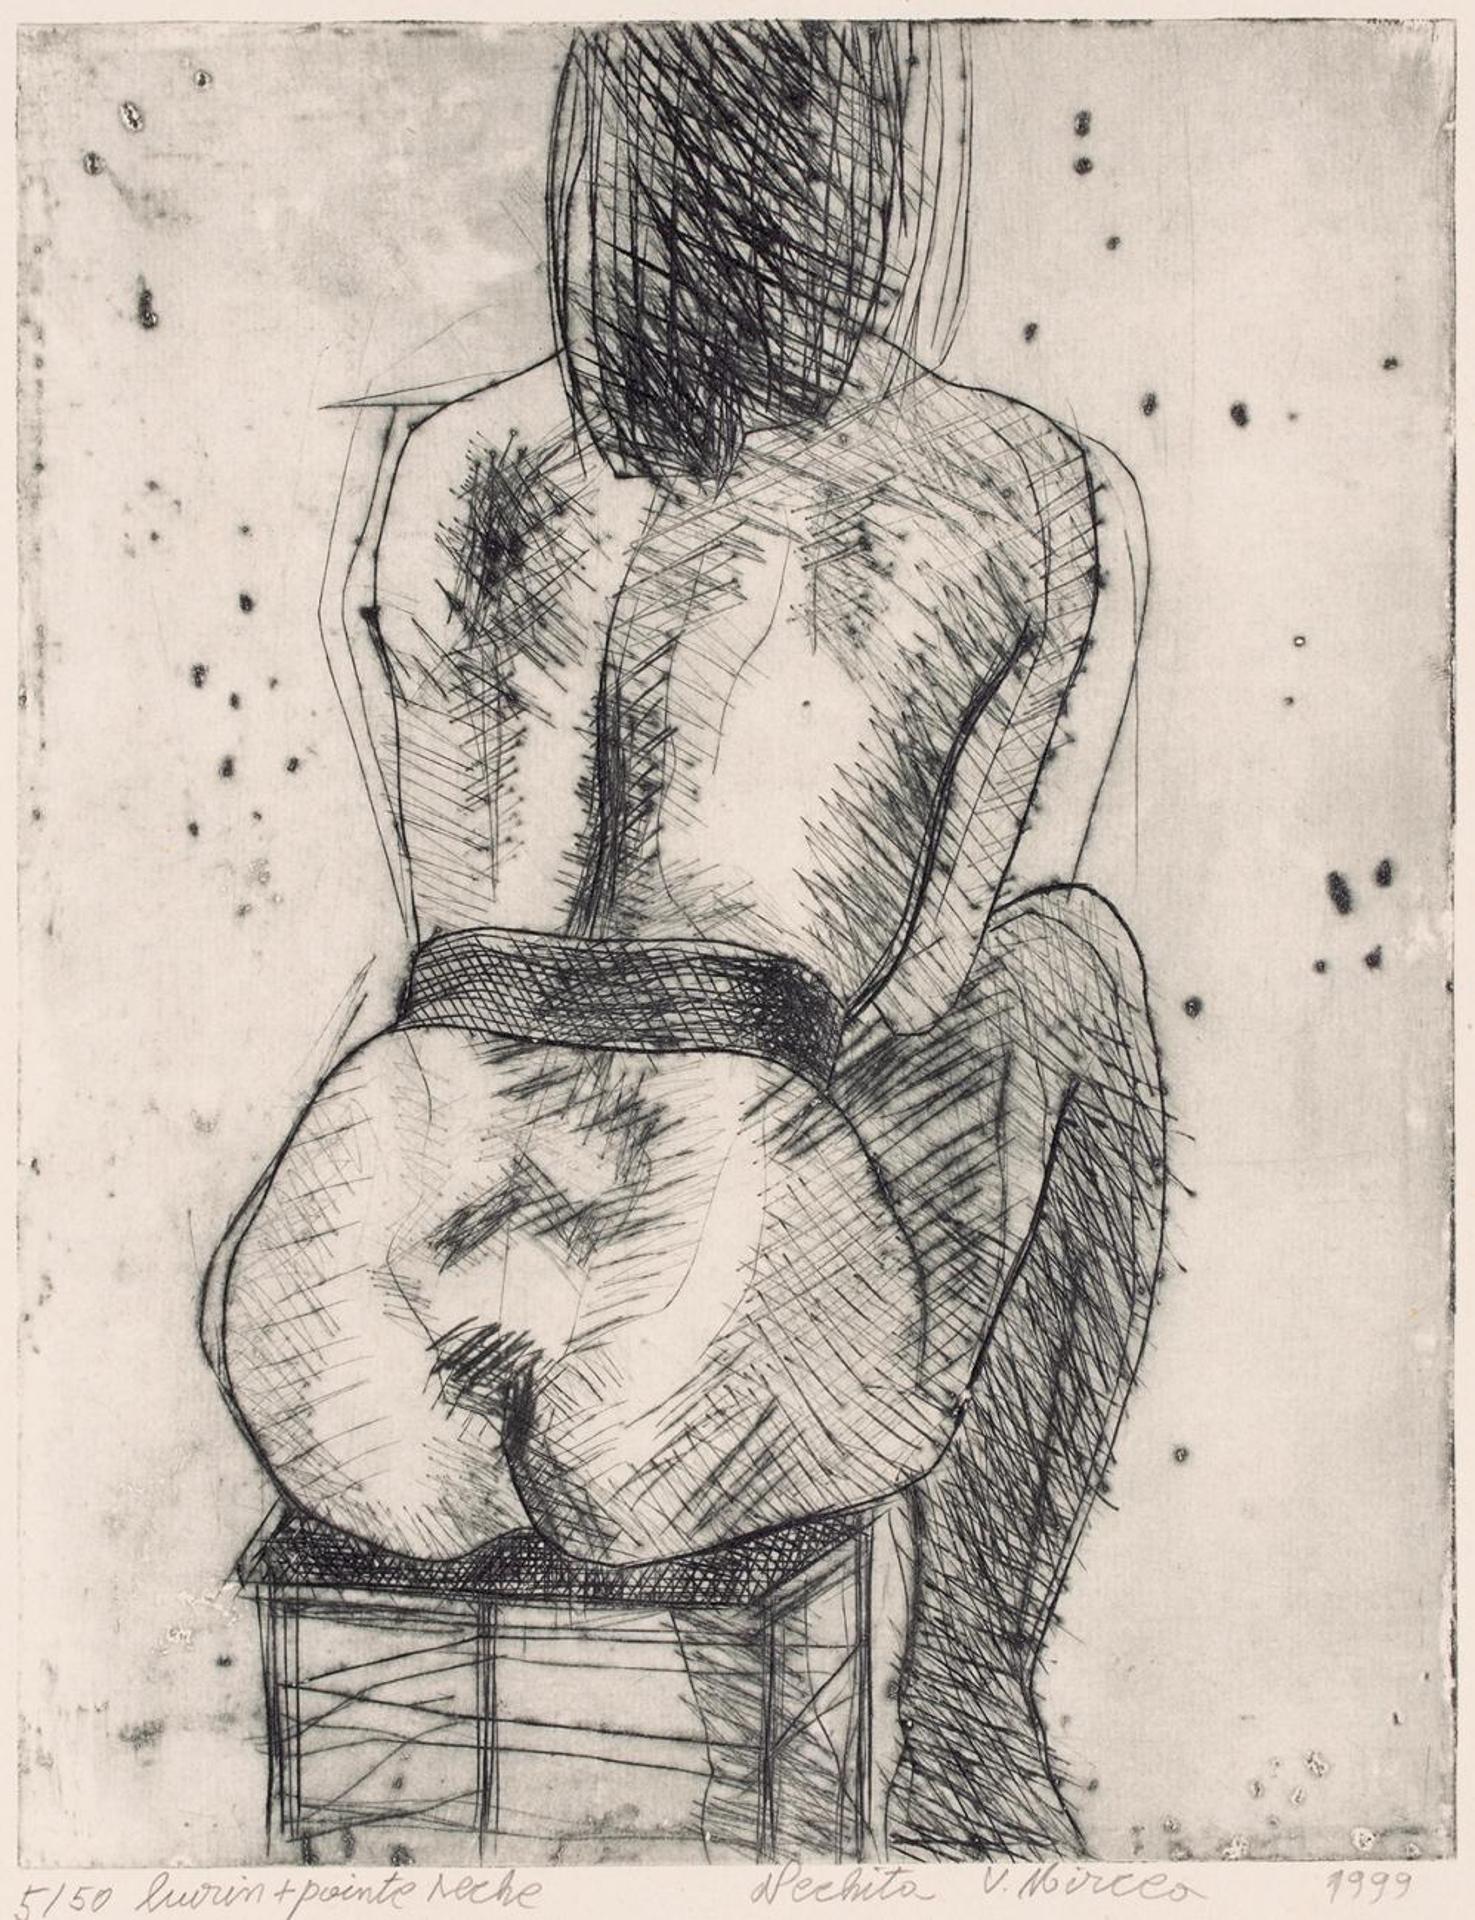 Mircea Nechita (1963) - Untitled - Seated Model